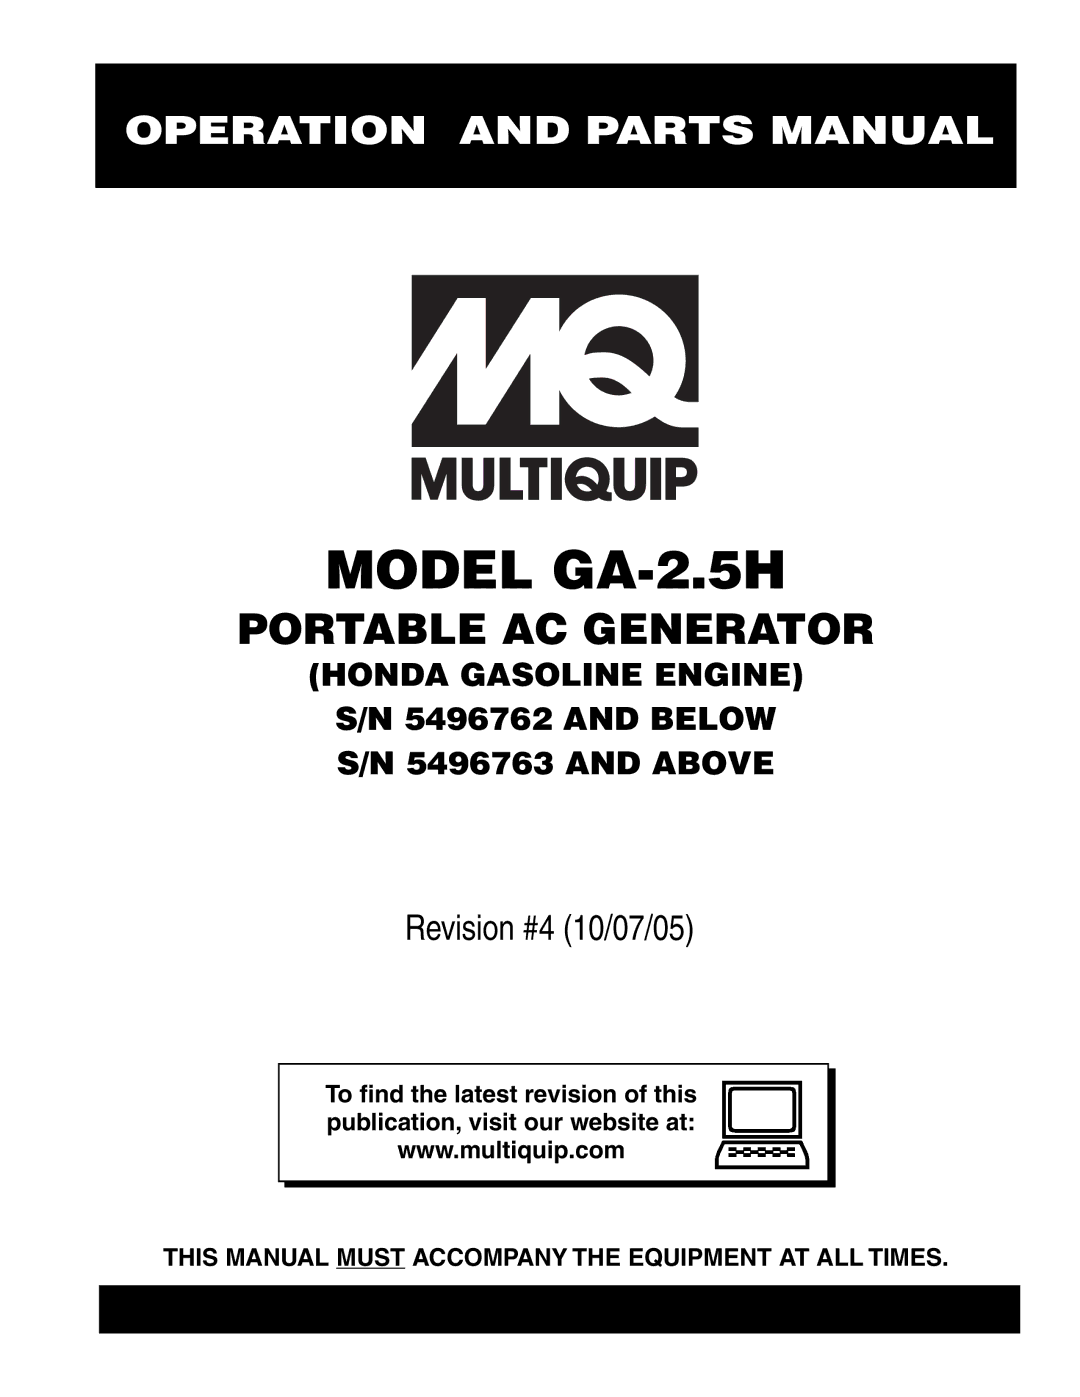 Honda Power Equipment manual Model GA-2.5H 